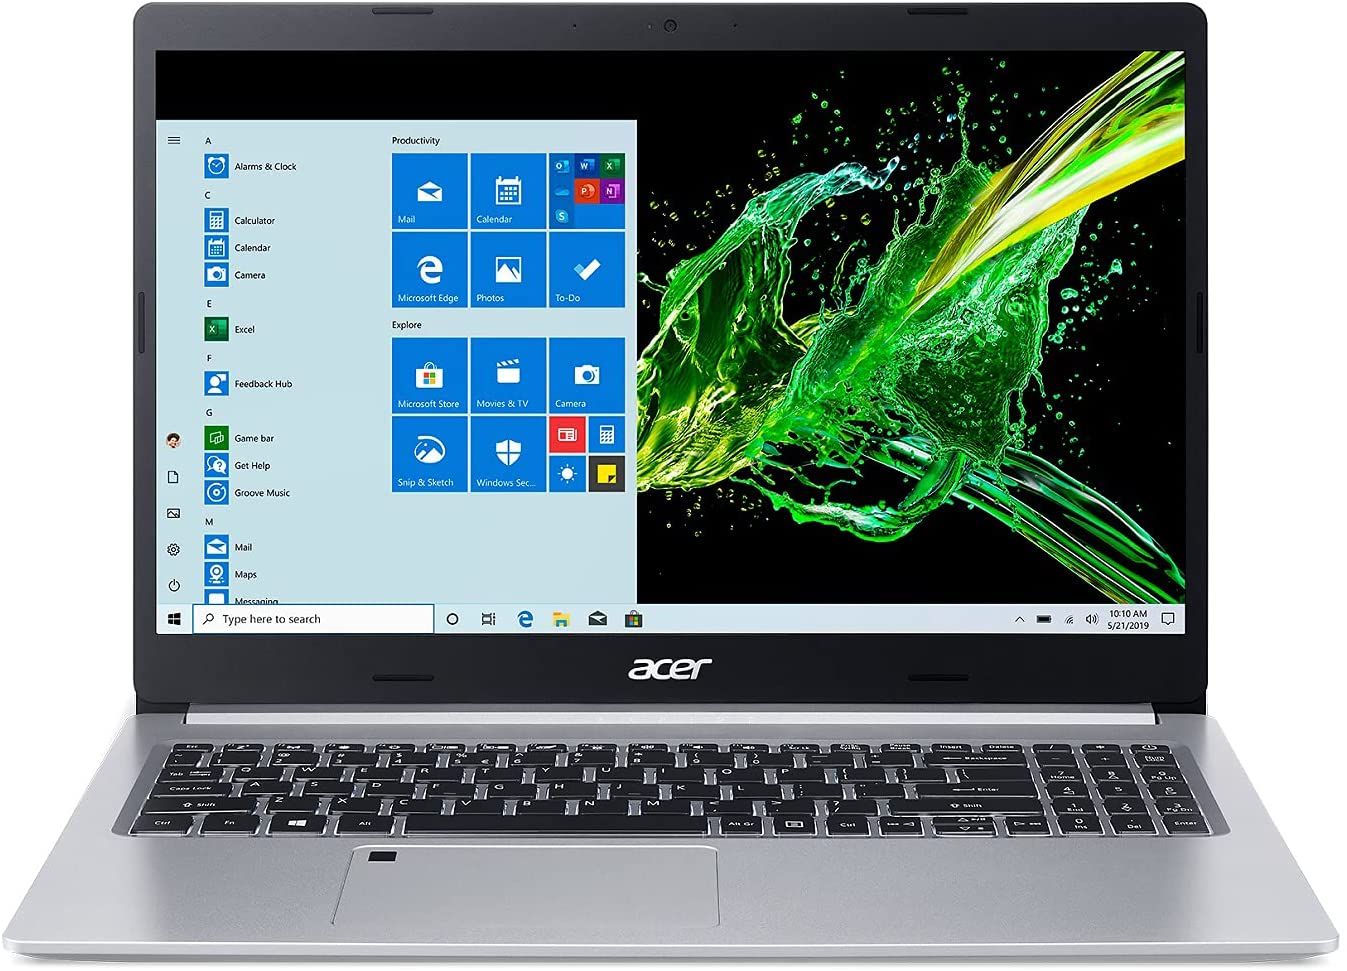 Acer Aspire 5 Design 1